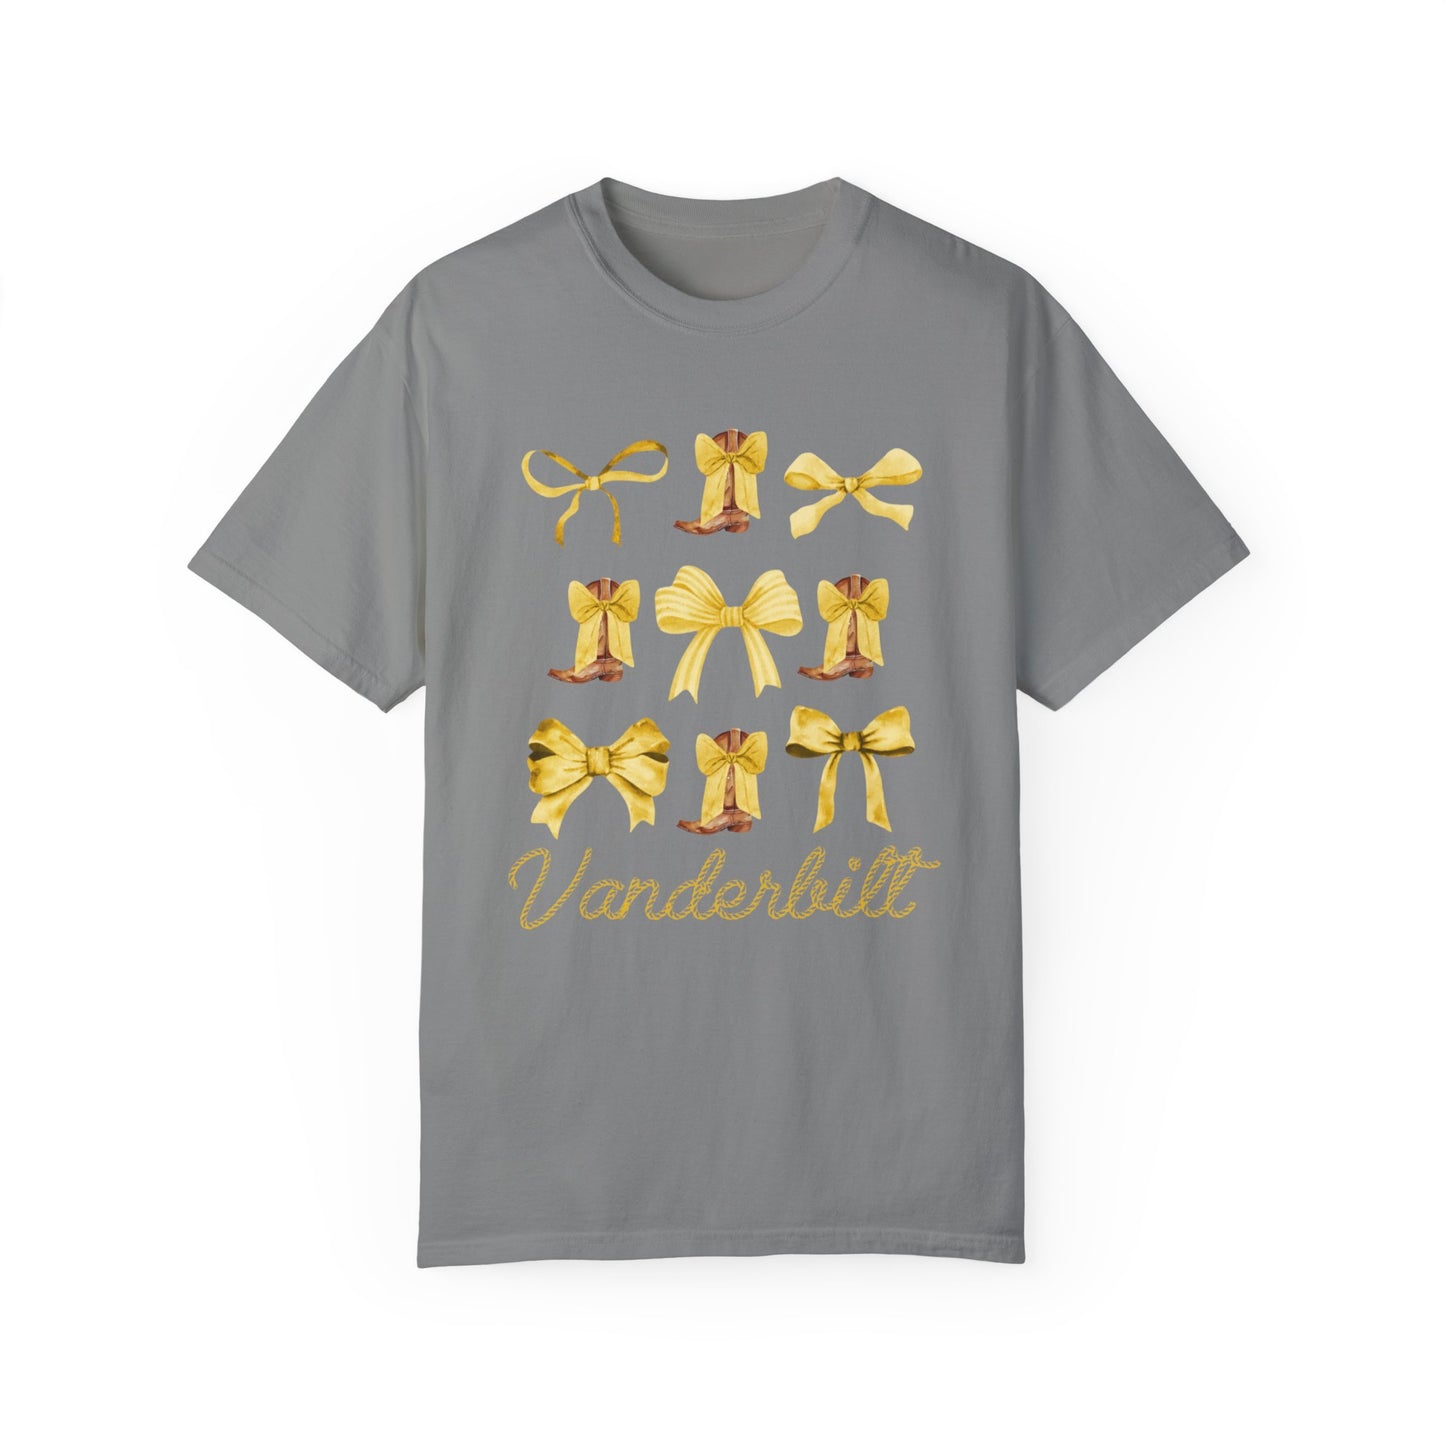 Coquette Vanderbilt Comfort Colors Tshirt